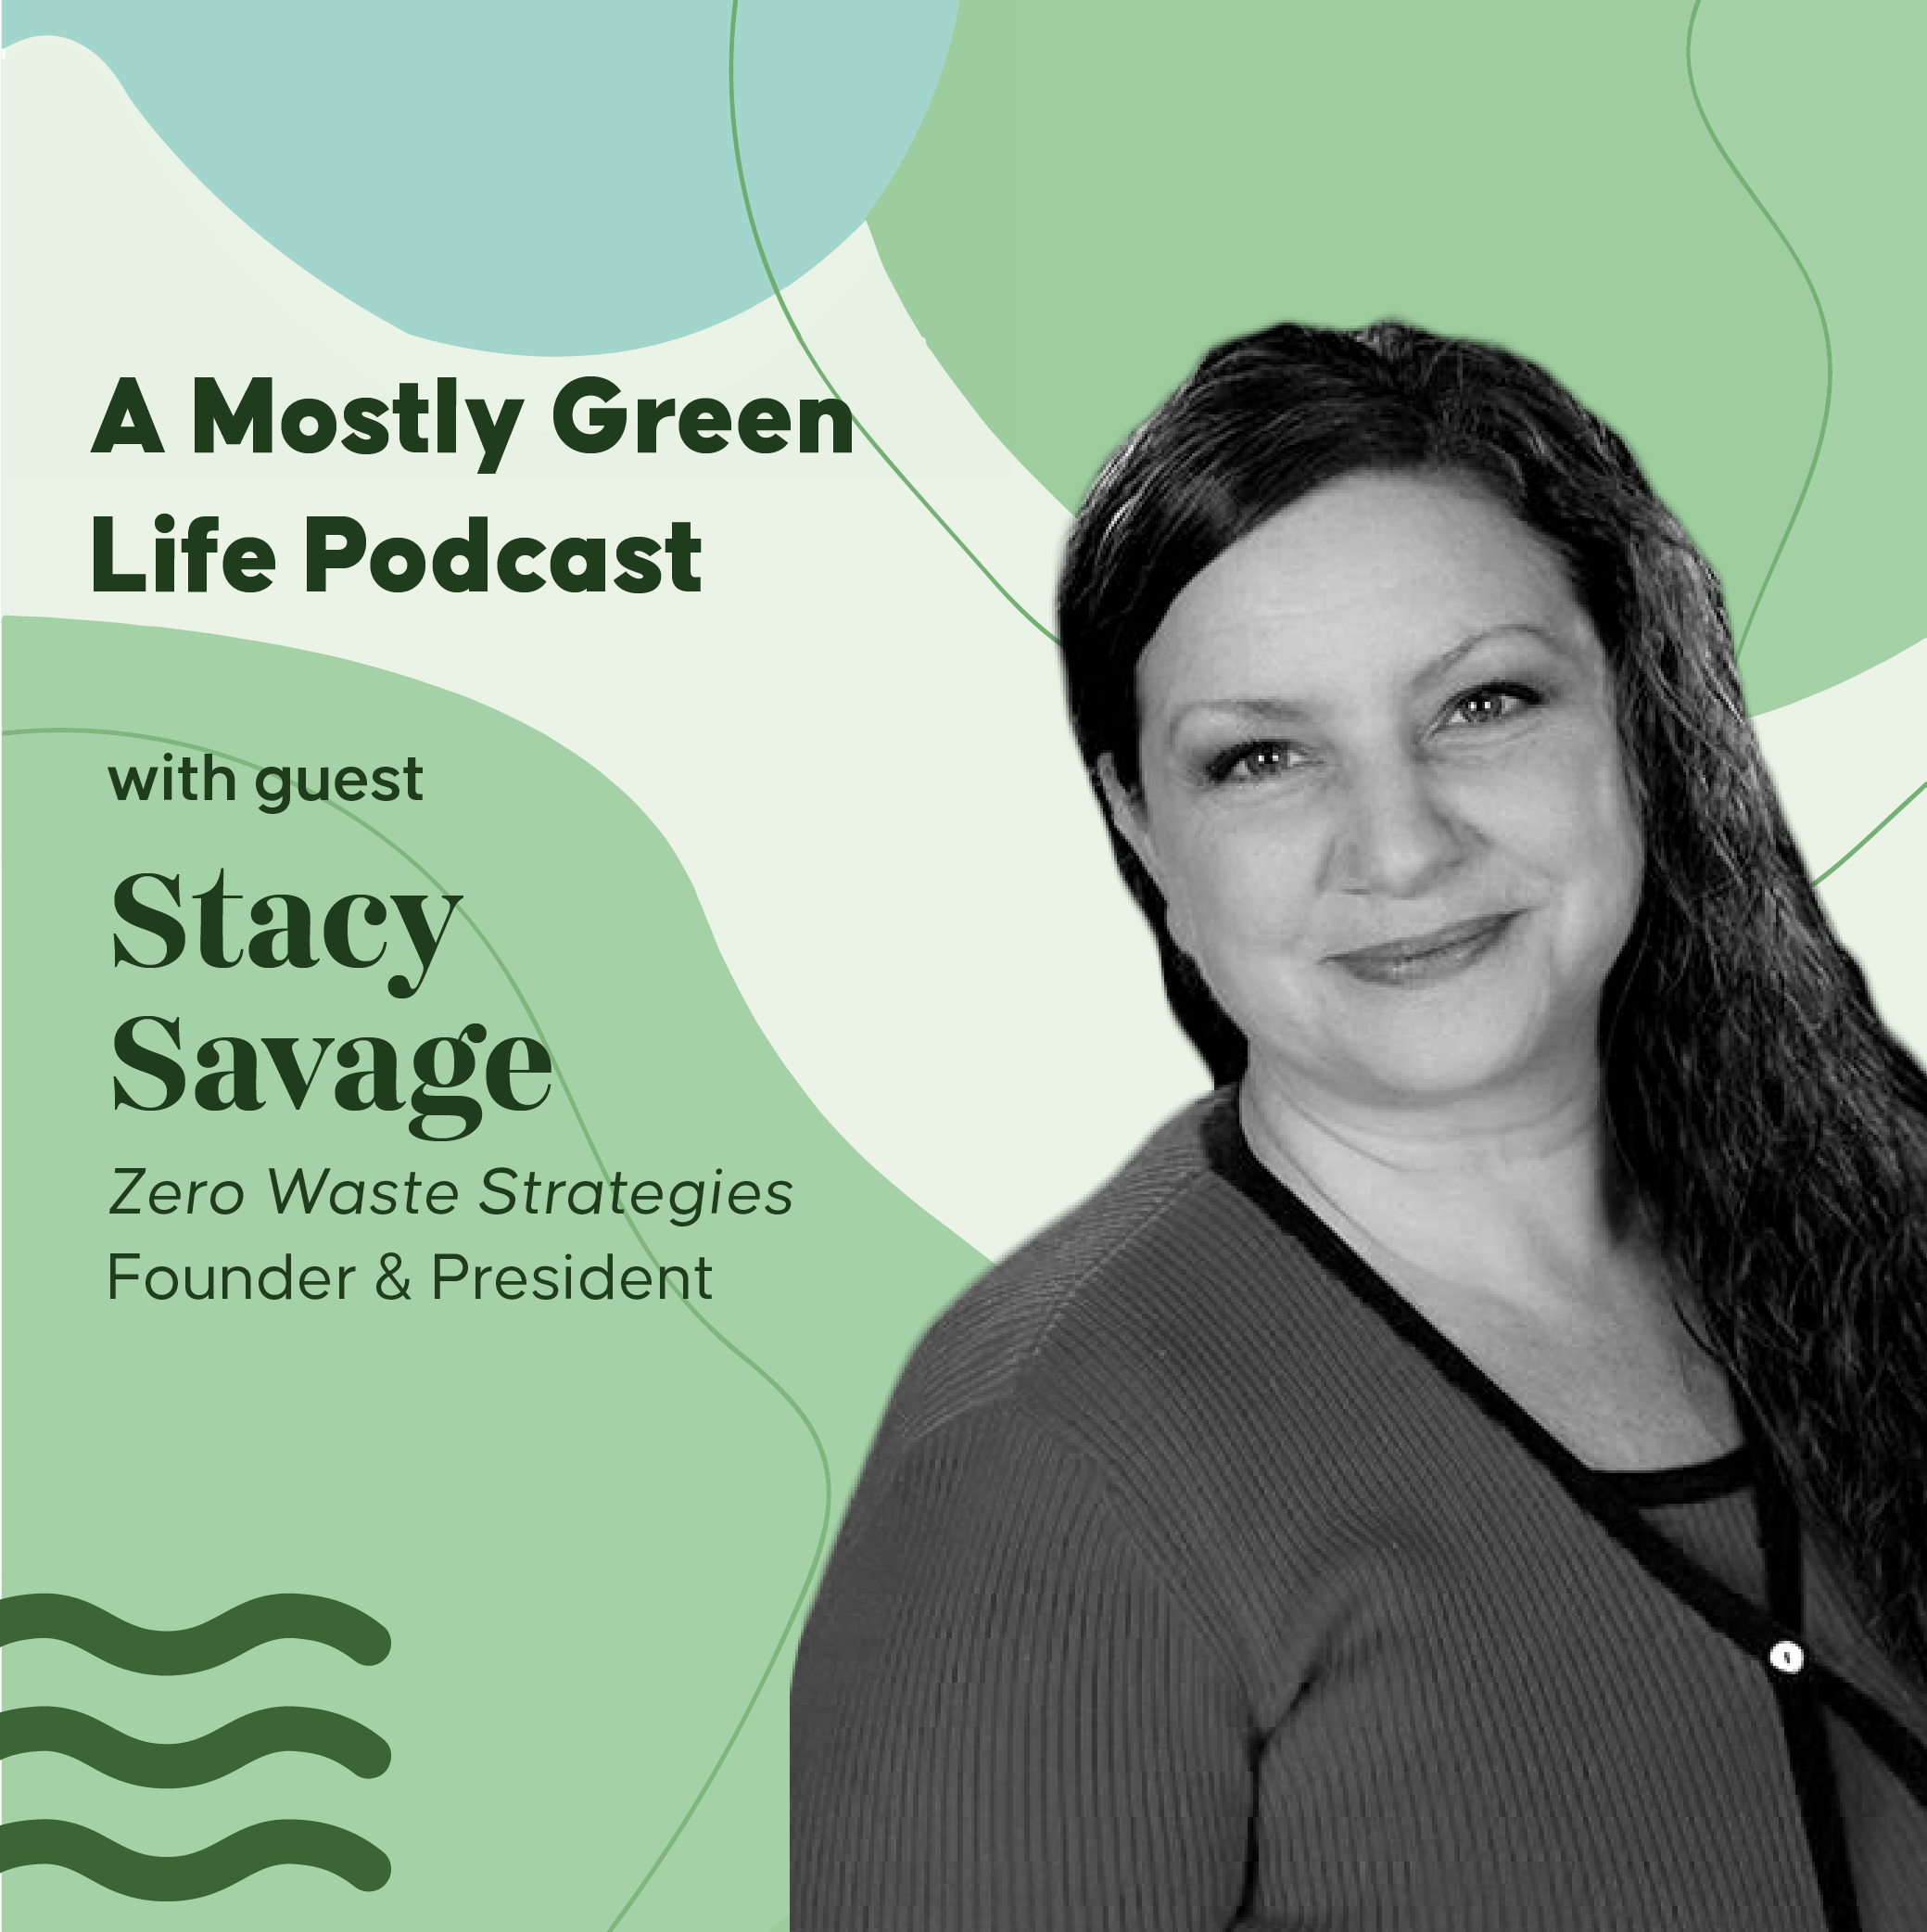 Stacy Savage of Zero Waste Strategies